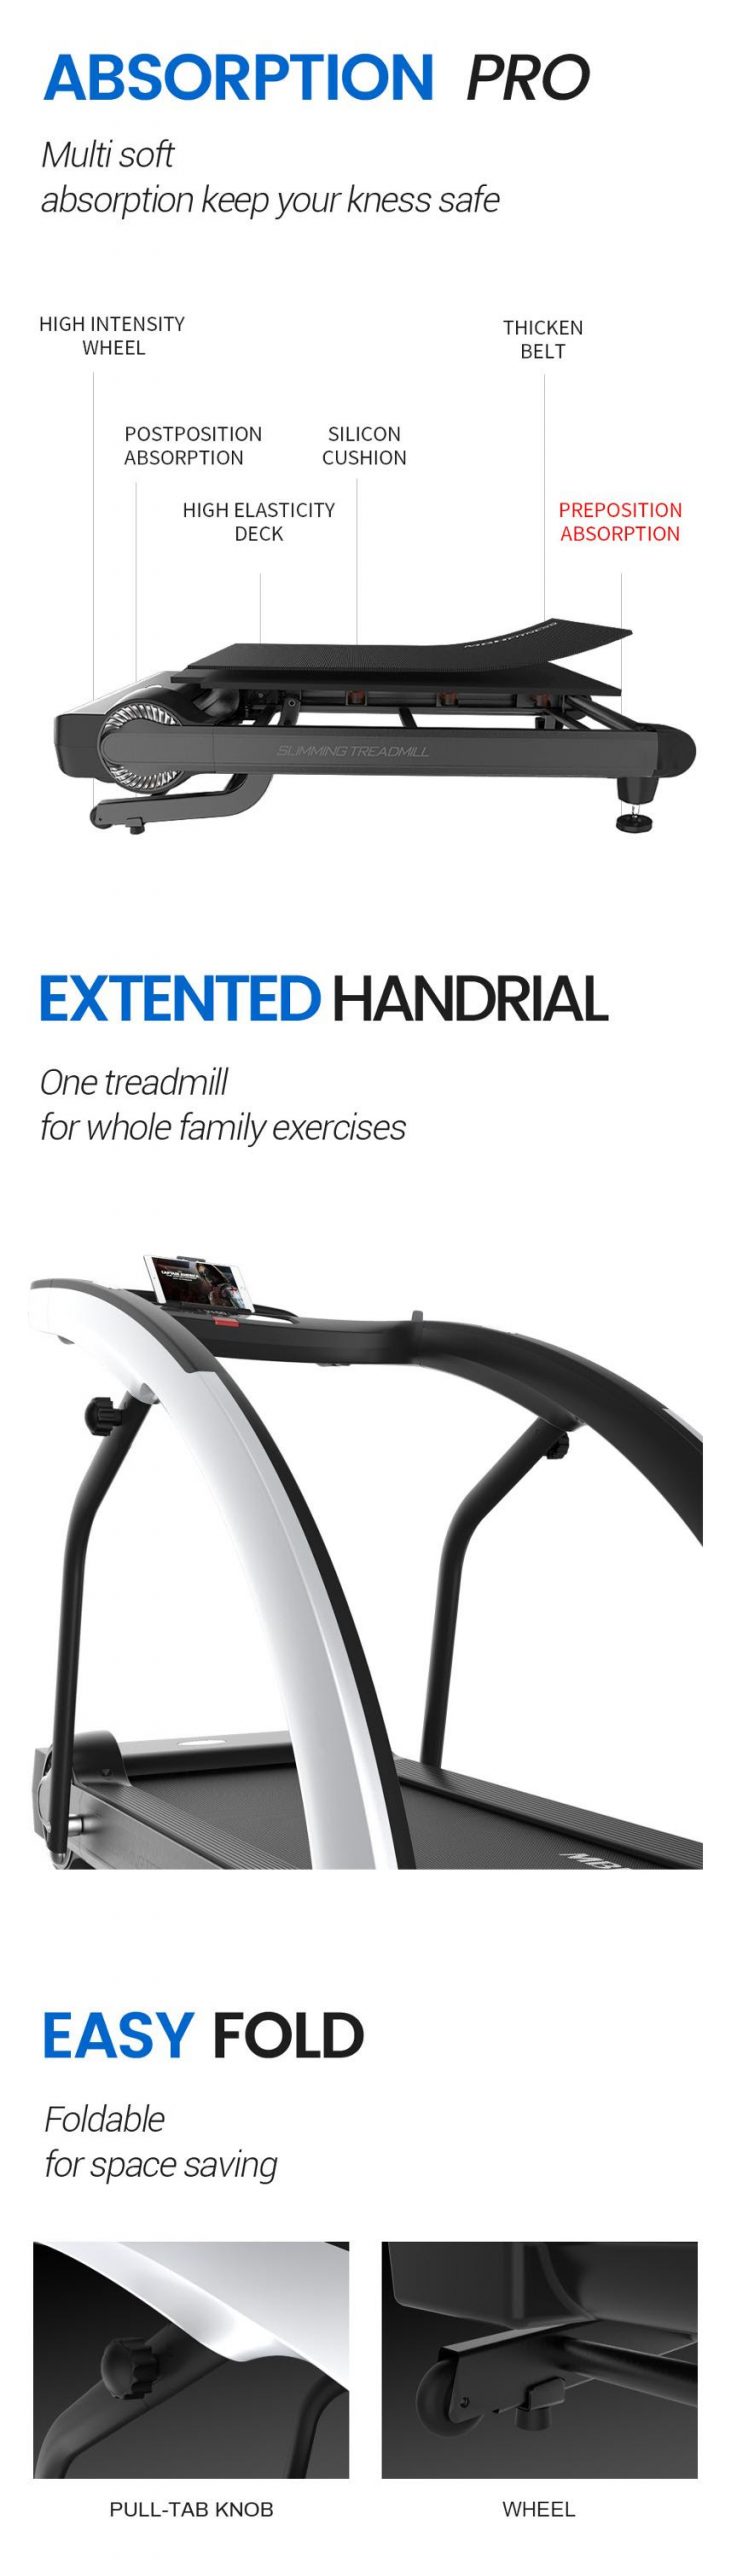 The MBF Fitness ST01A Treadmill - Absorption Pro